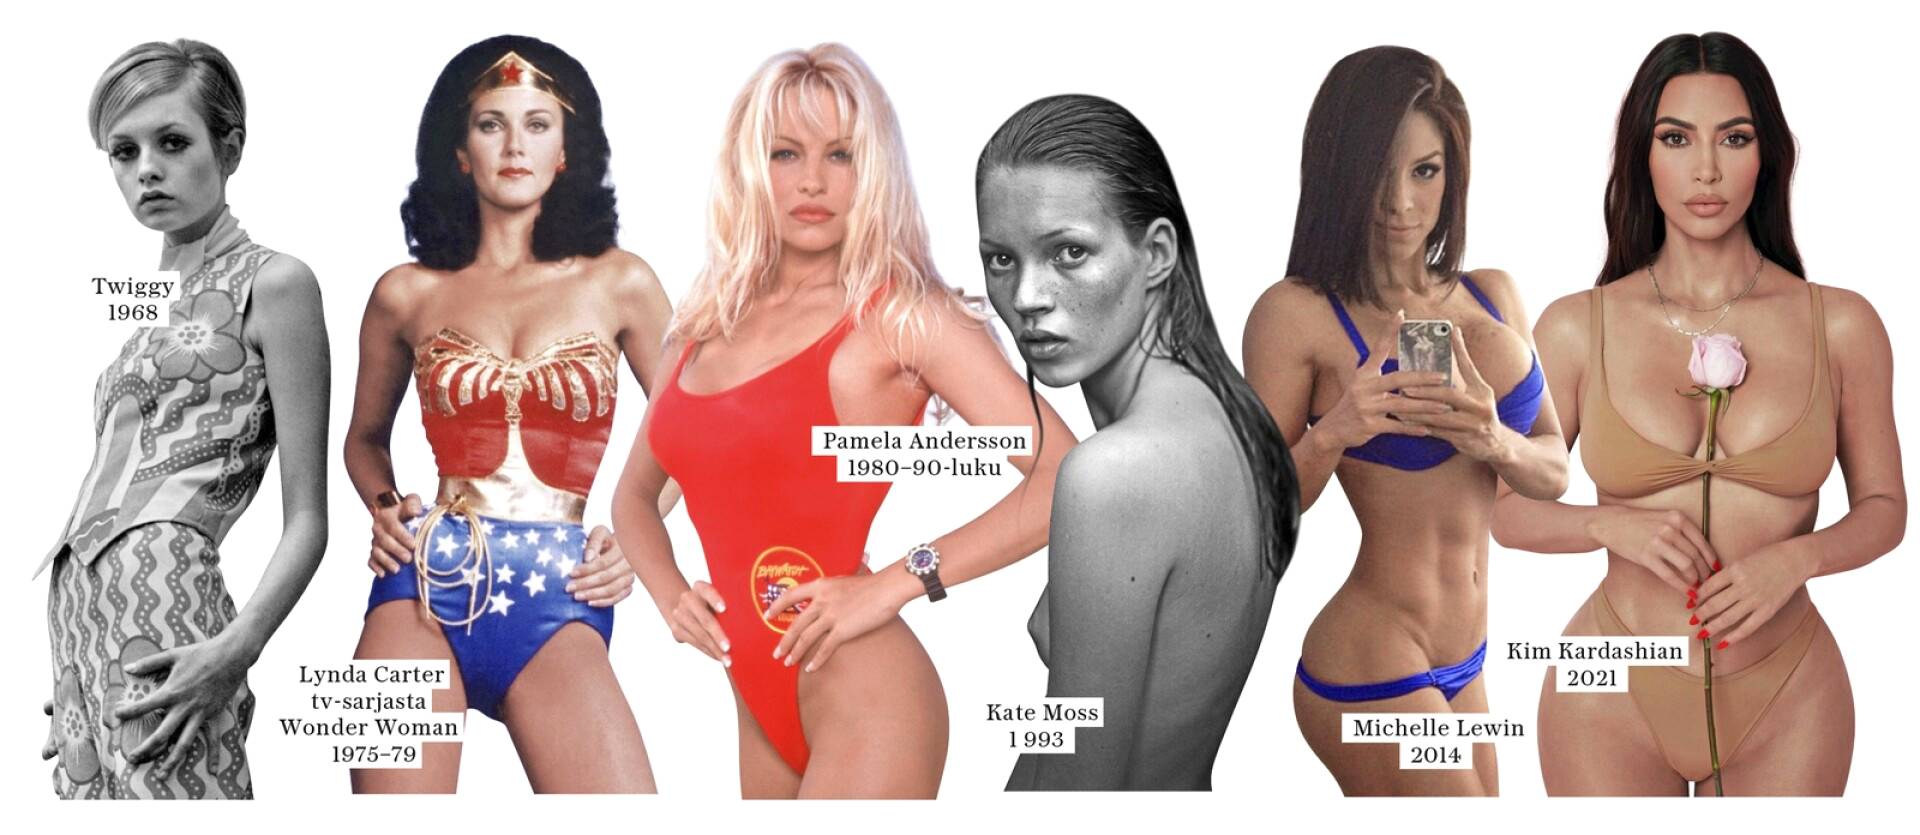 Vasemmalta oikealle: Twiggy, 1968, Lynda Carter (tv-sarjasta Wonder Woman), 1975–79, Pamela Anderson, 1980-luku. Kate Moss, 1903. Michelle Lewin, 2014. Kim Kardashian, 2021. 